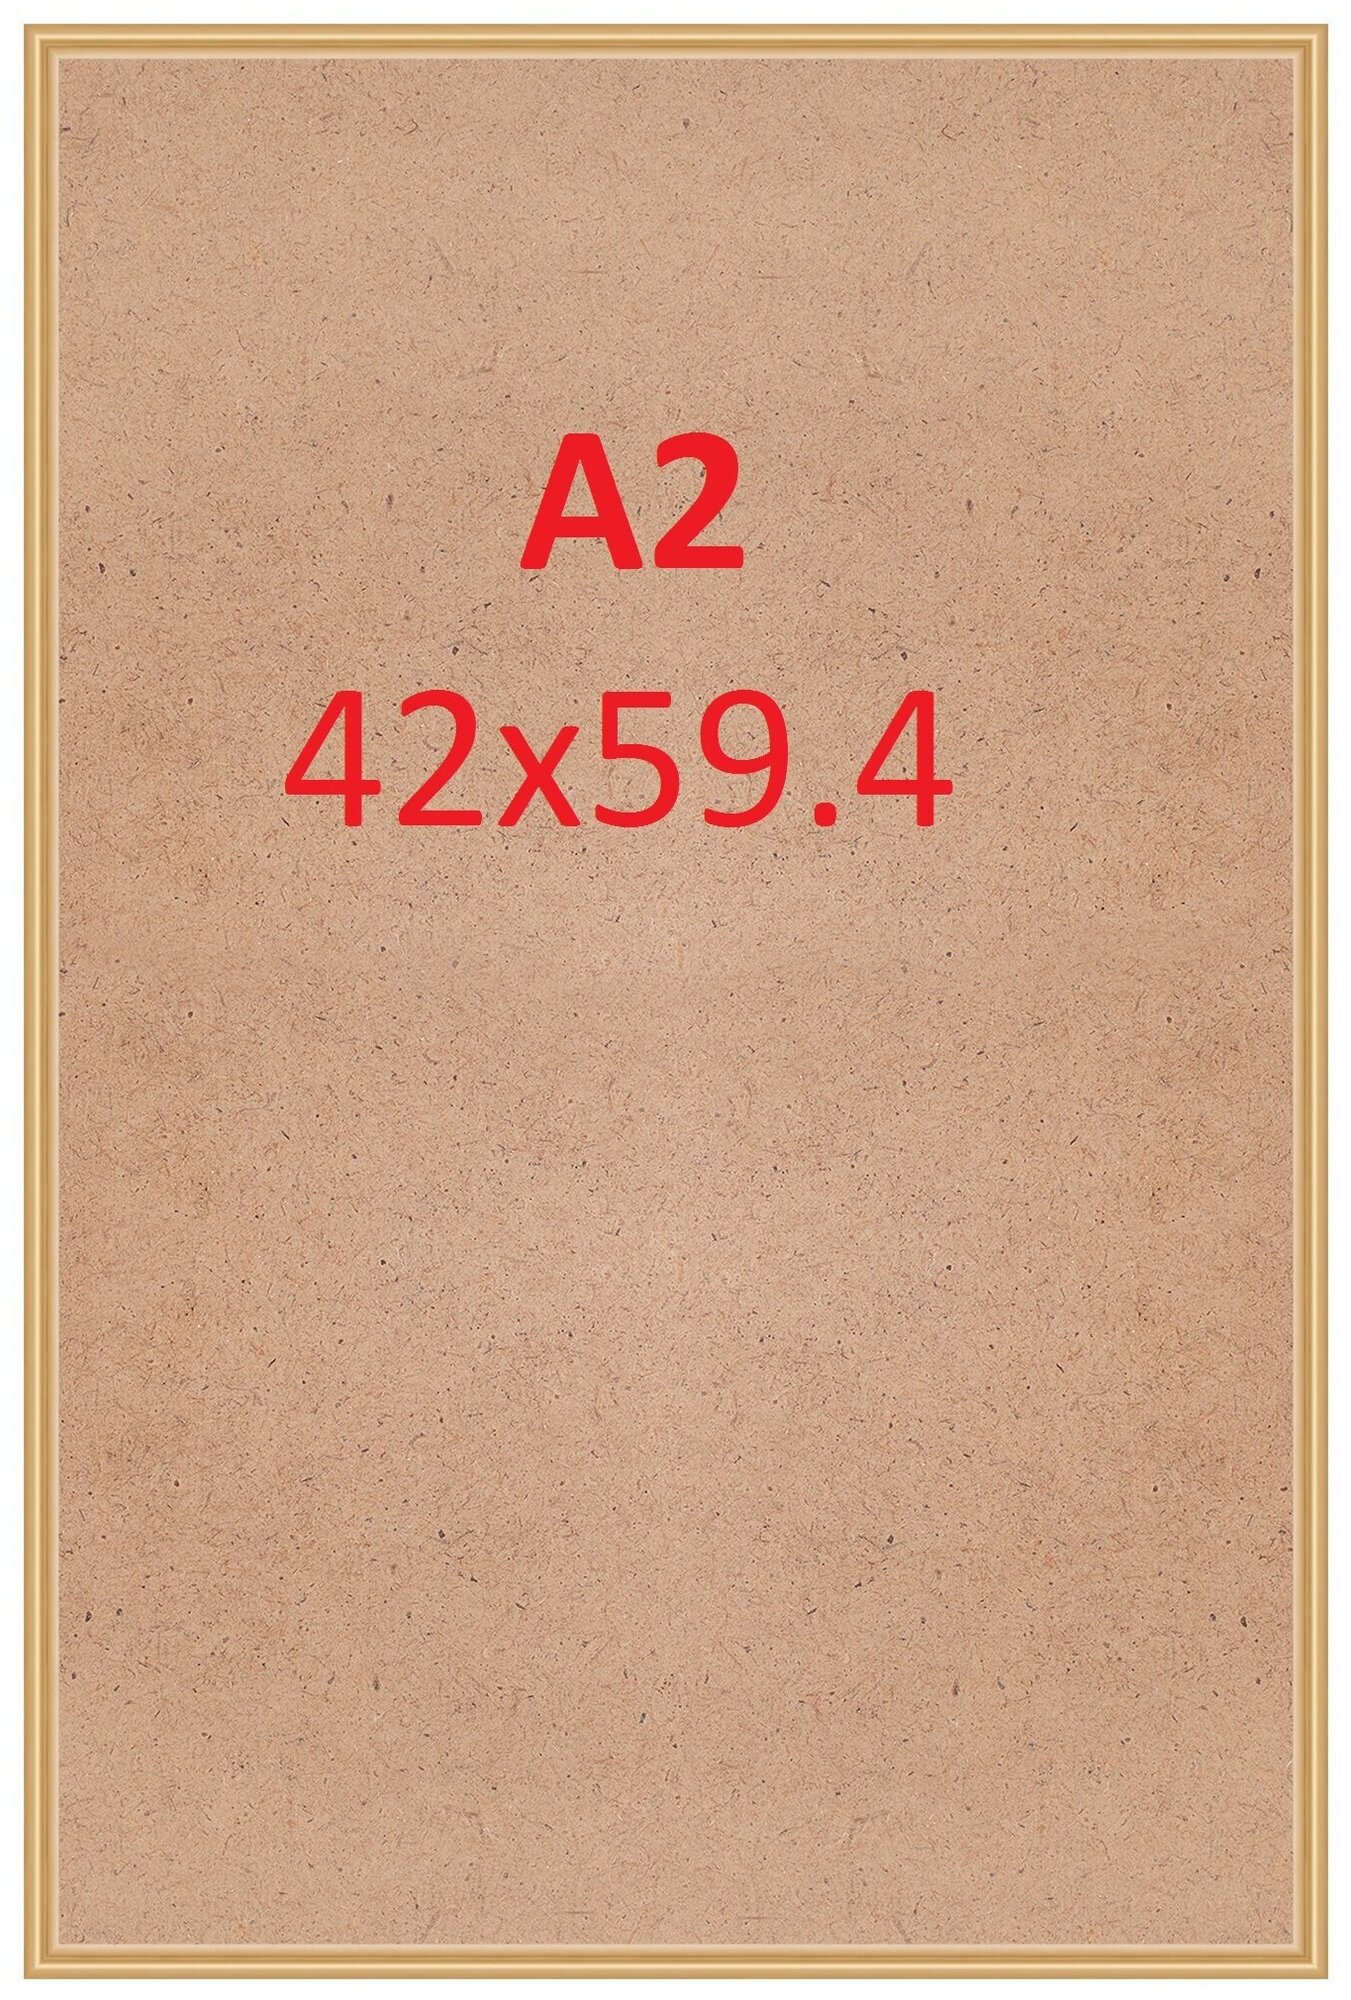 Рамка 42.0x59.4 (А2) Nielsen алюминий золото №2